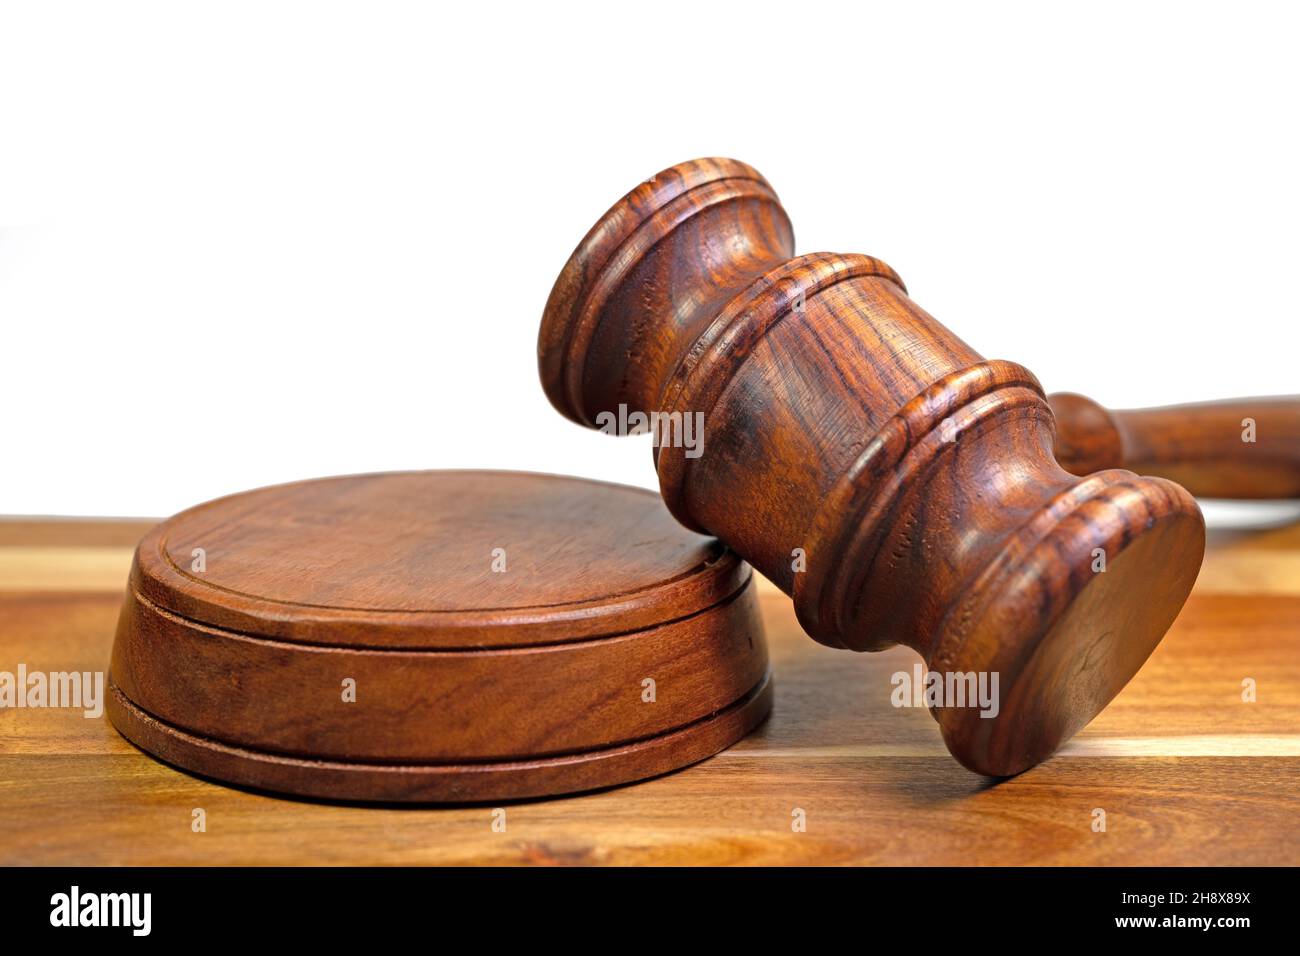 Judge's gavel against white background, close-up Stock Photo